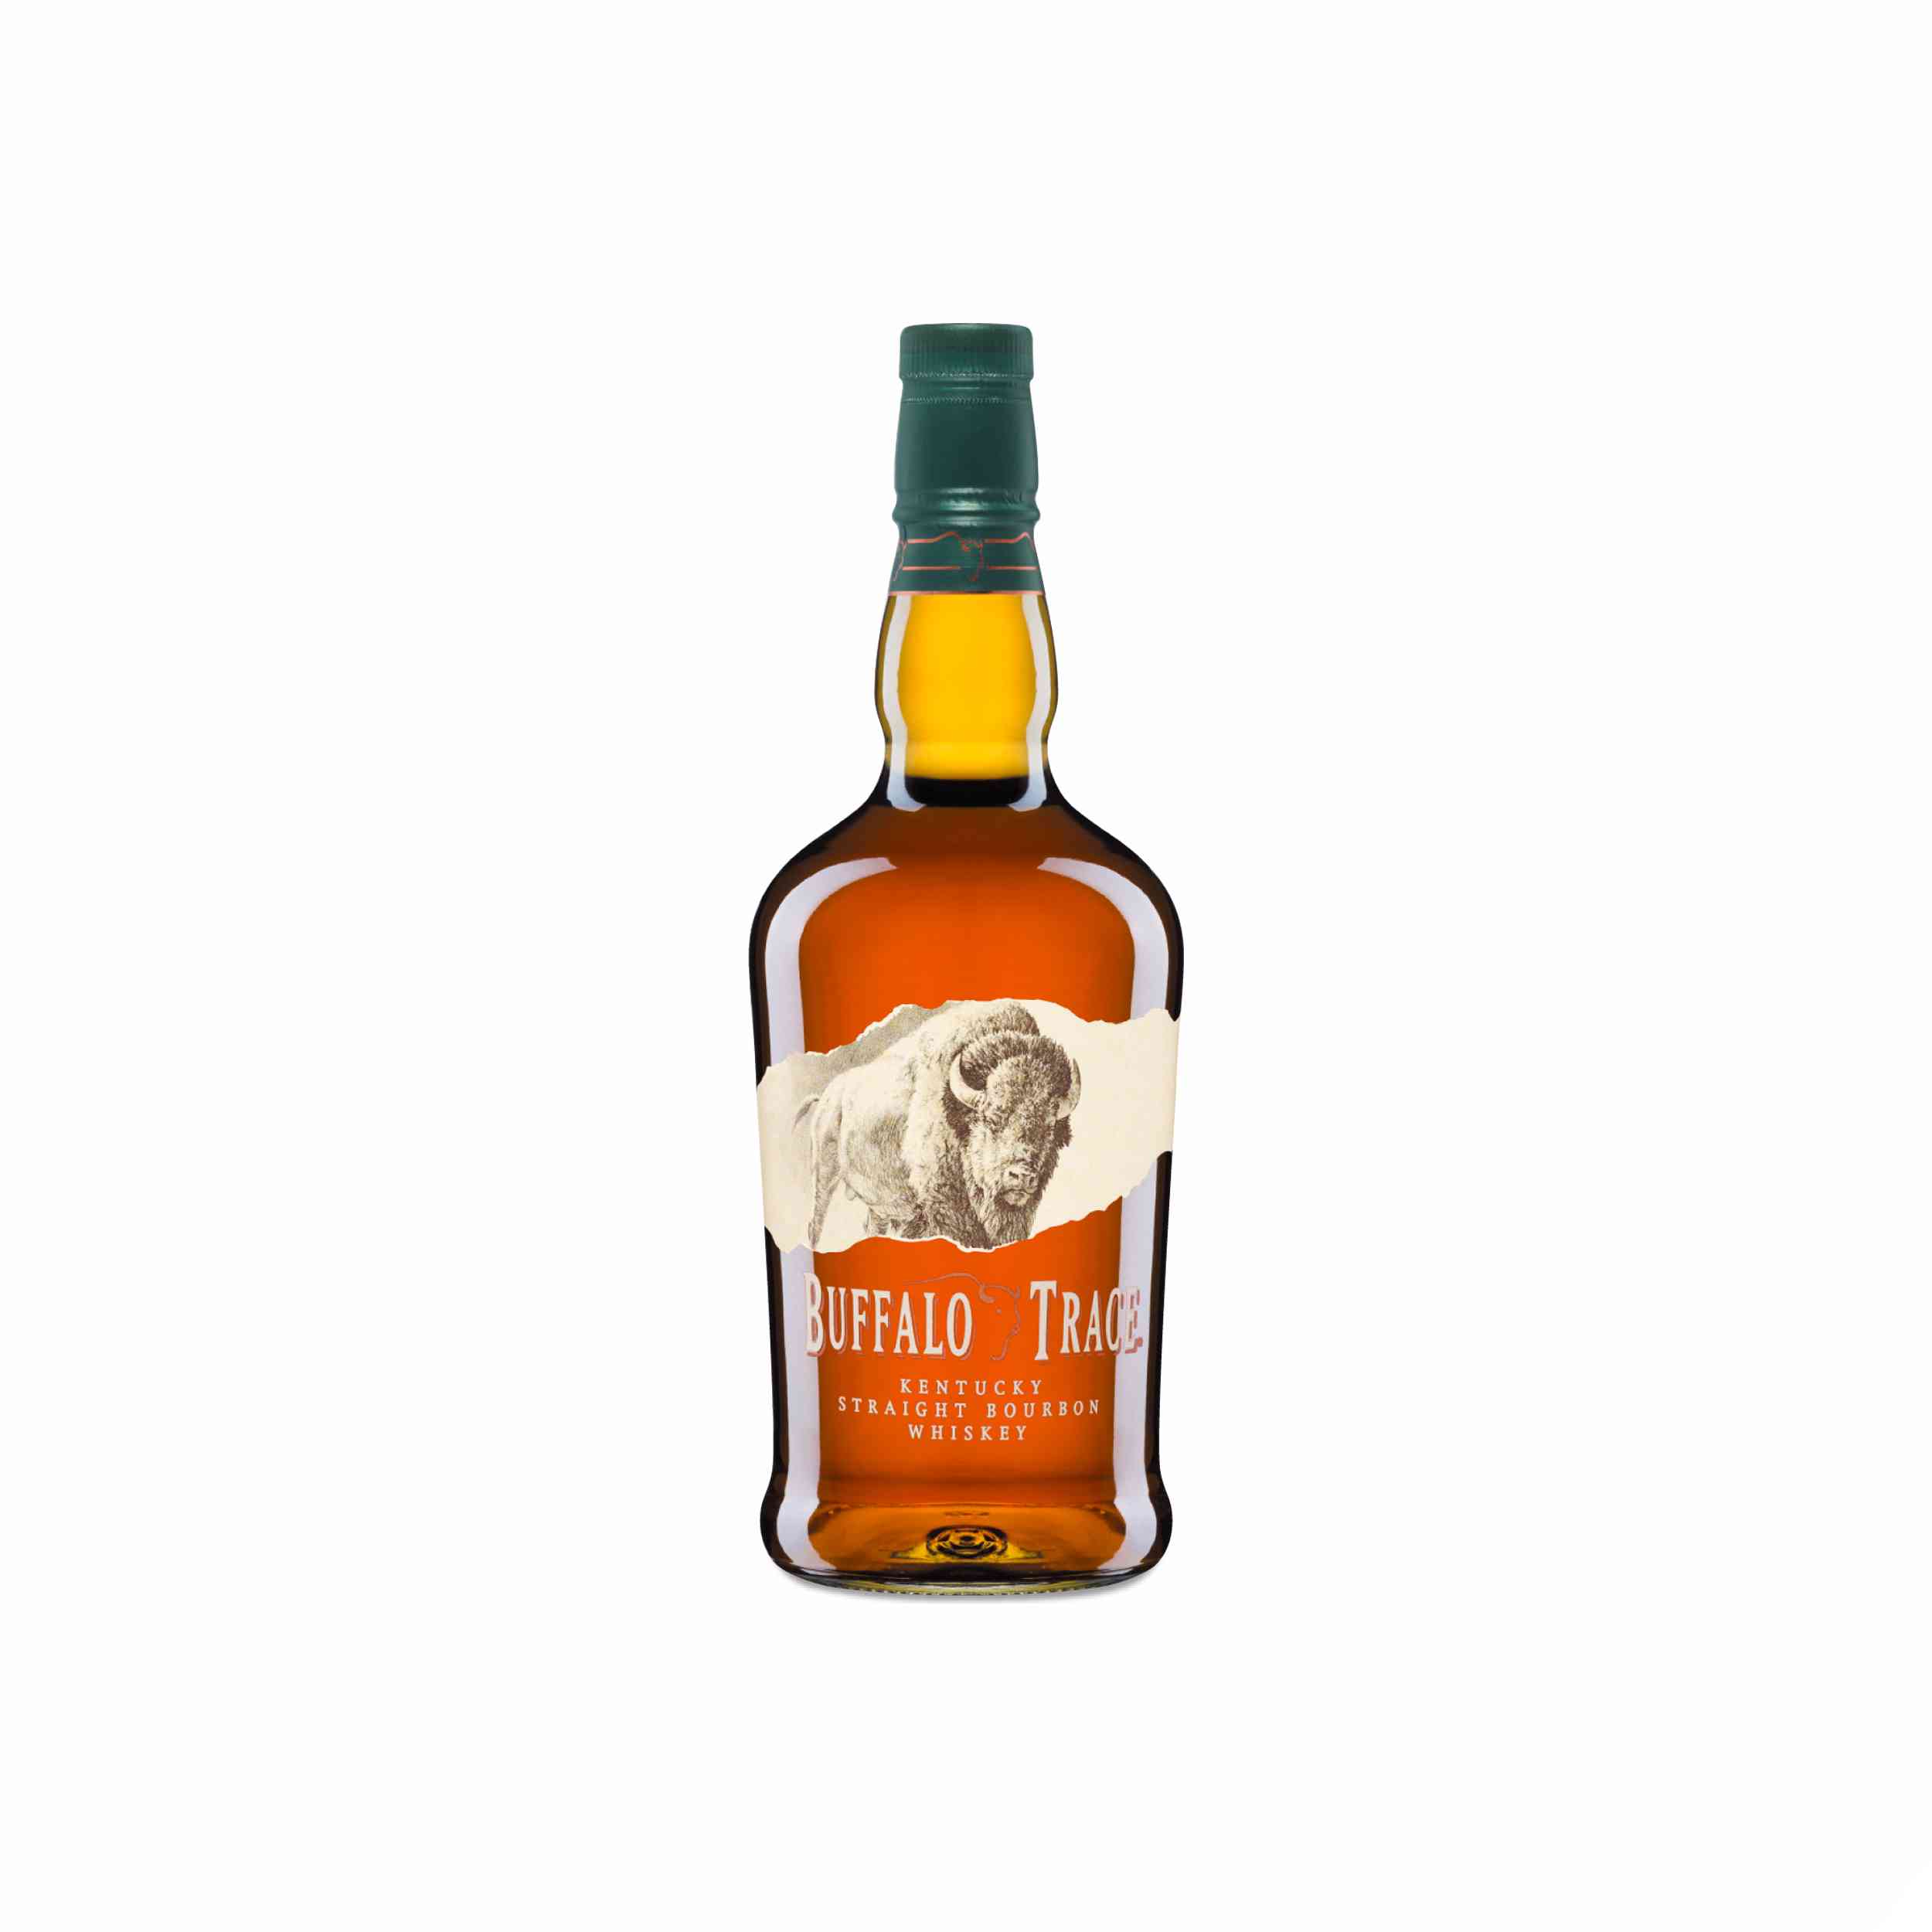 Buffalo Trace Kentucky Bourbon Whisky